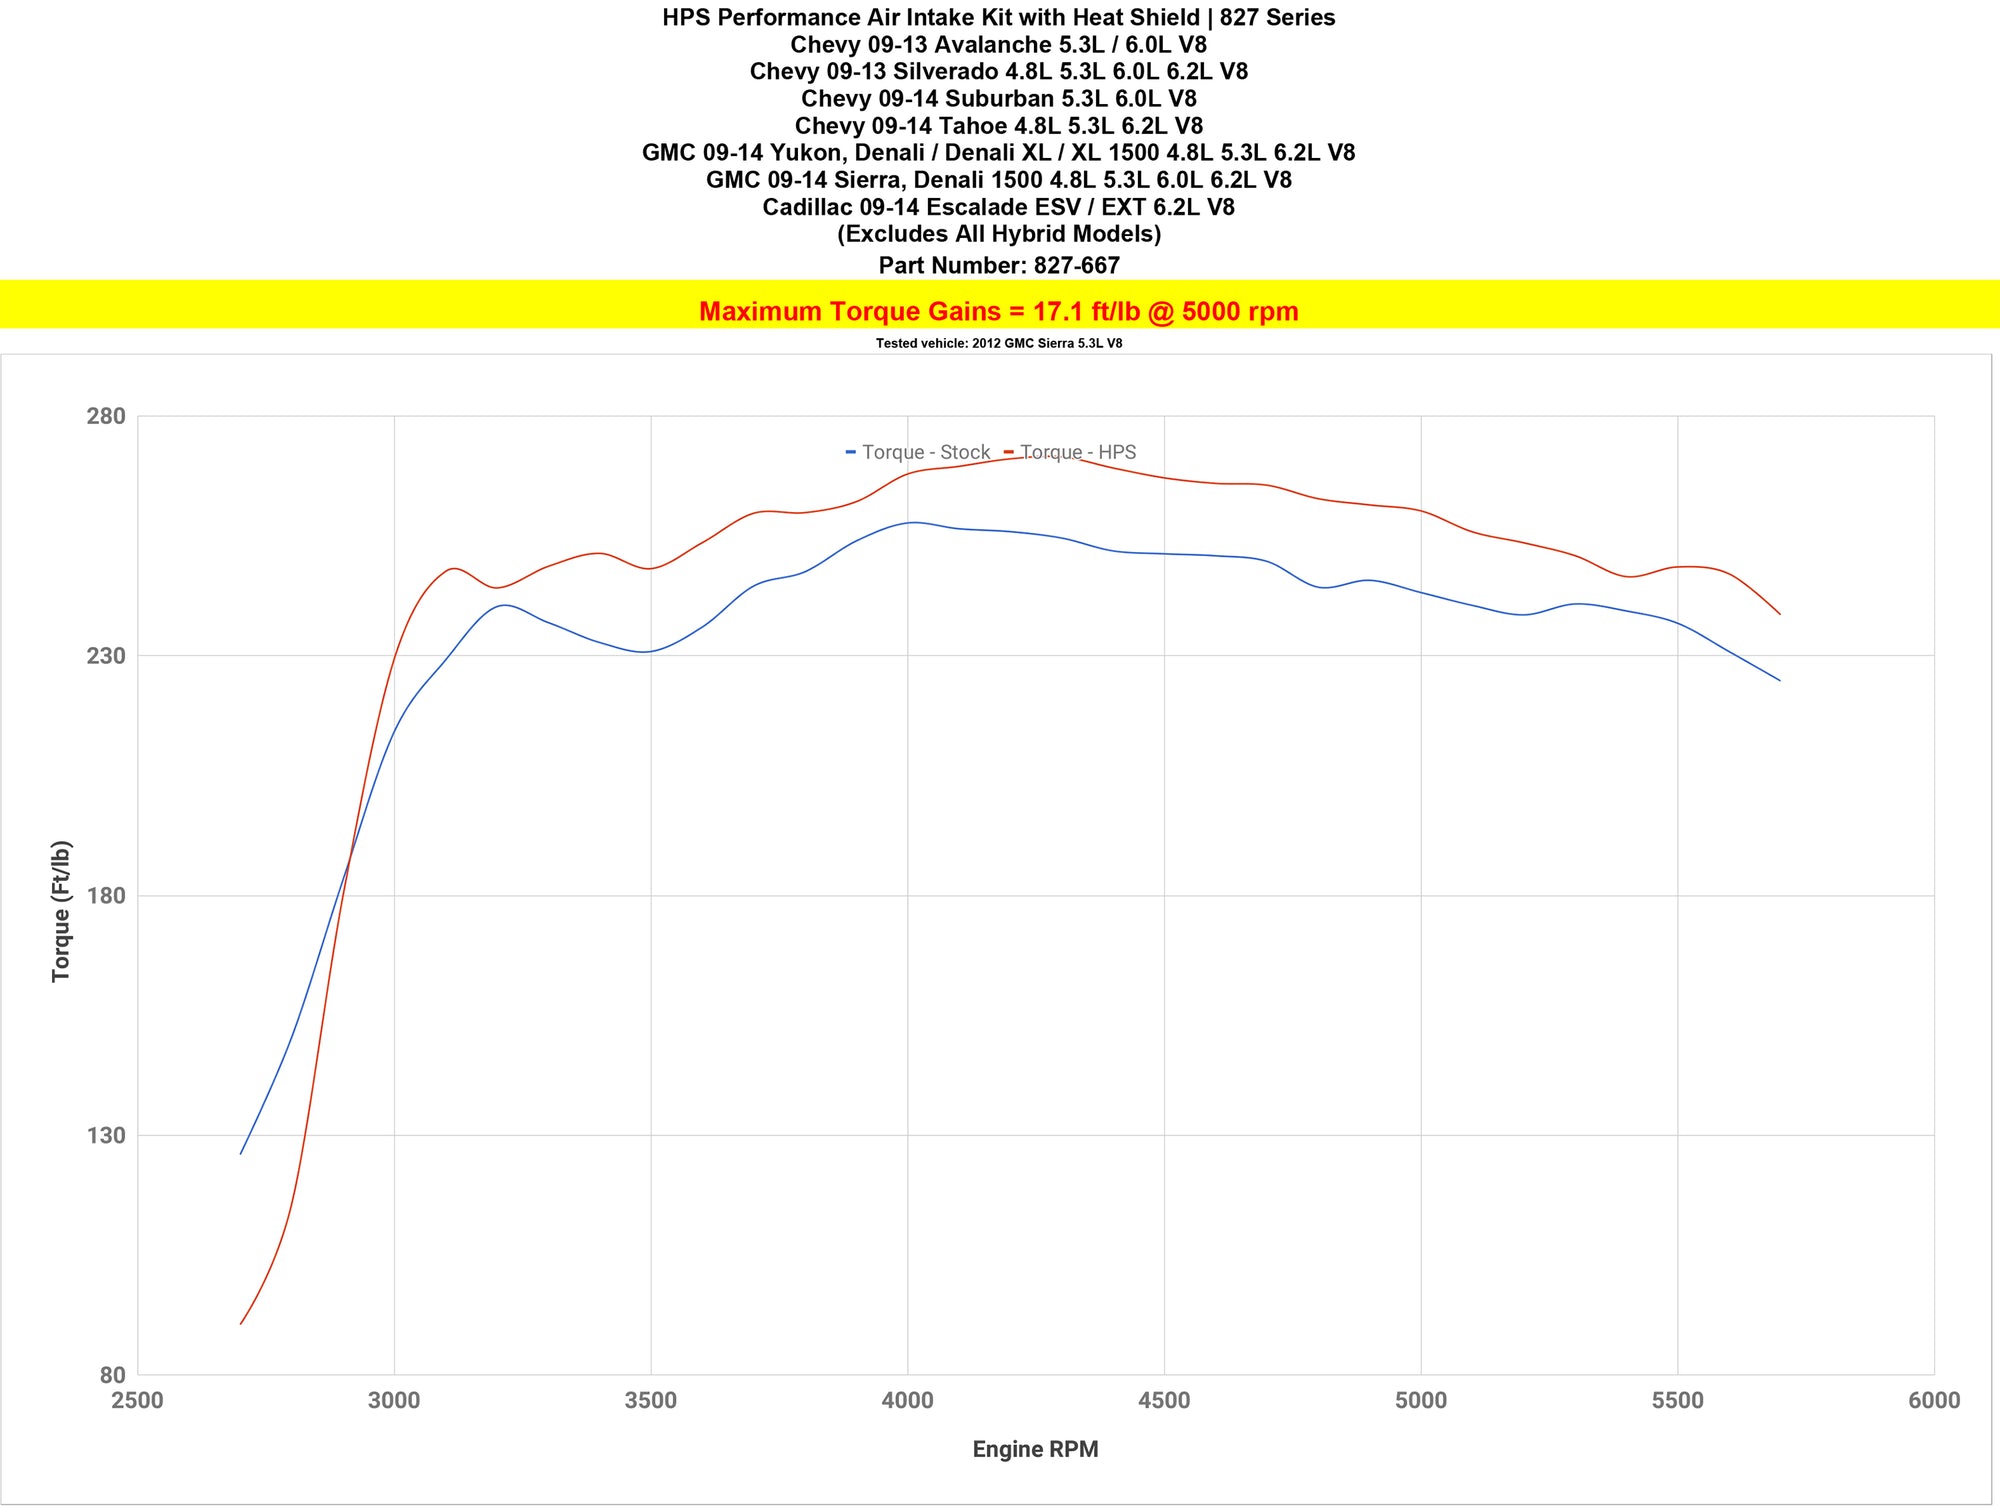 Dyno proven gains 17.1 ft/lb HPS Performance Shortram Air Intake Kit 2009-2014 Chevy Suburban 5.3L V8 827-667R